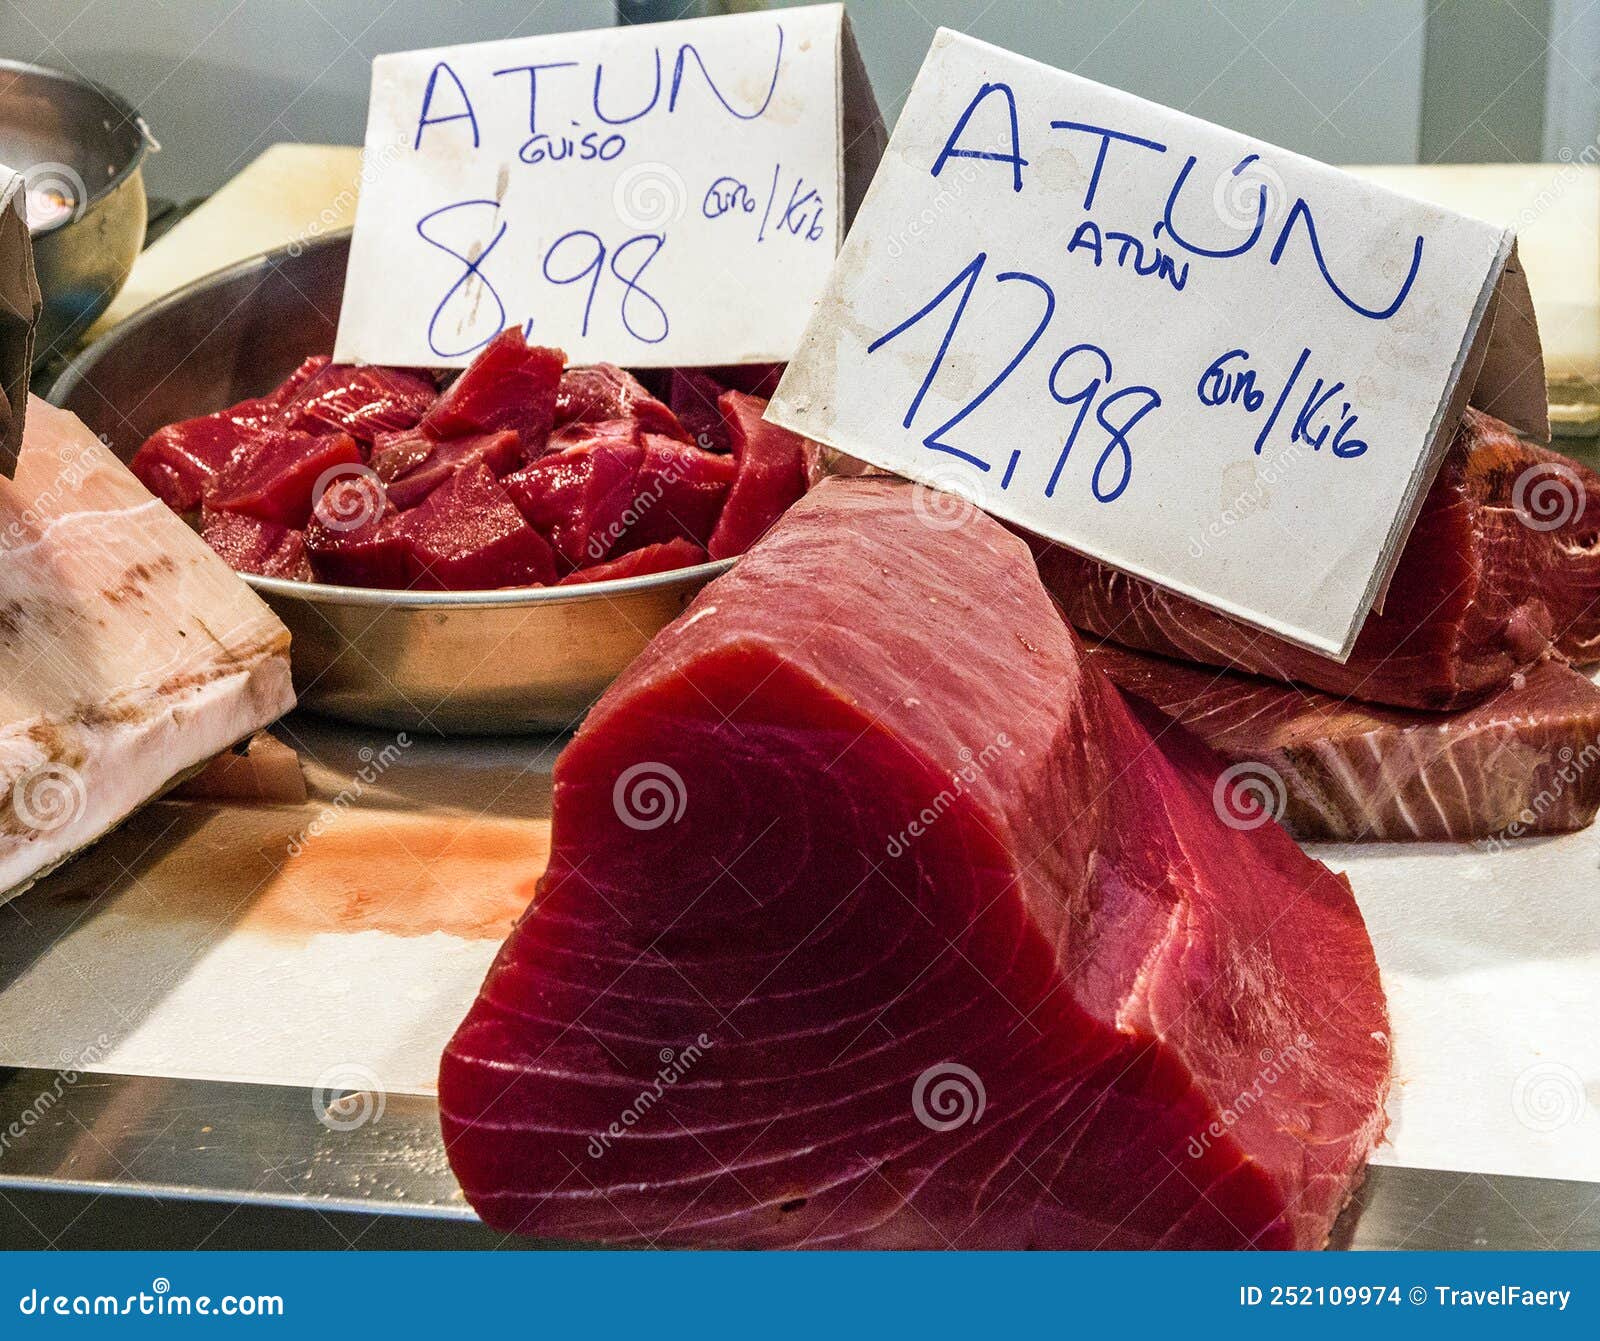 tuna fish crude meat, cut sea food